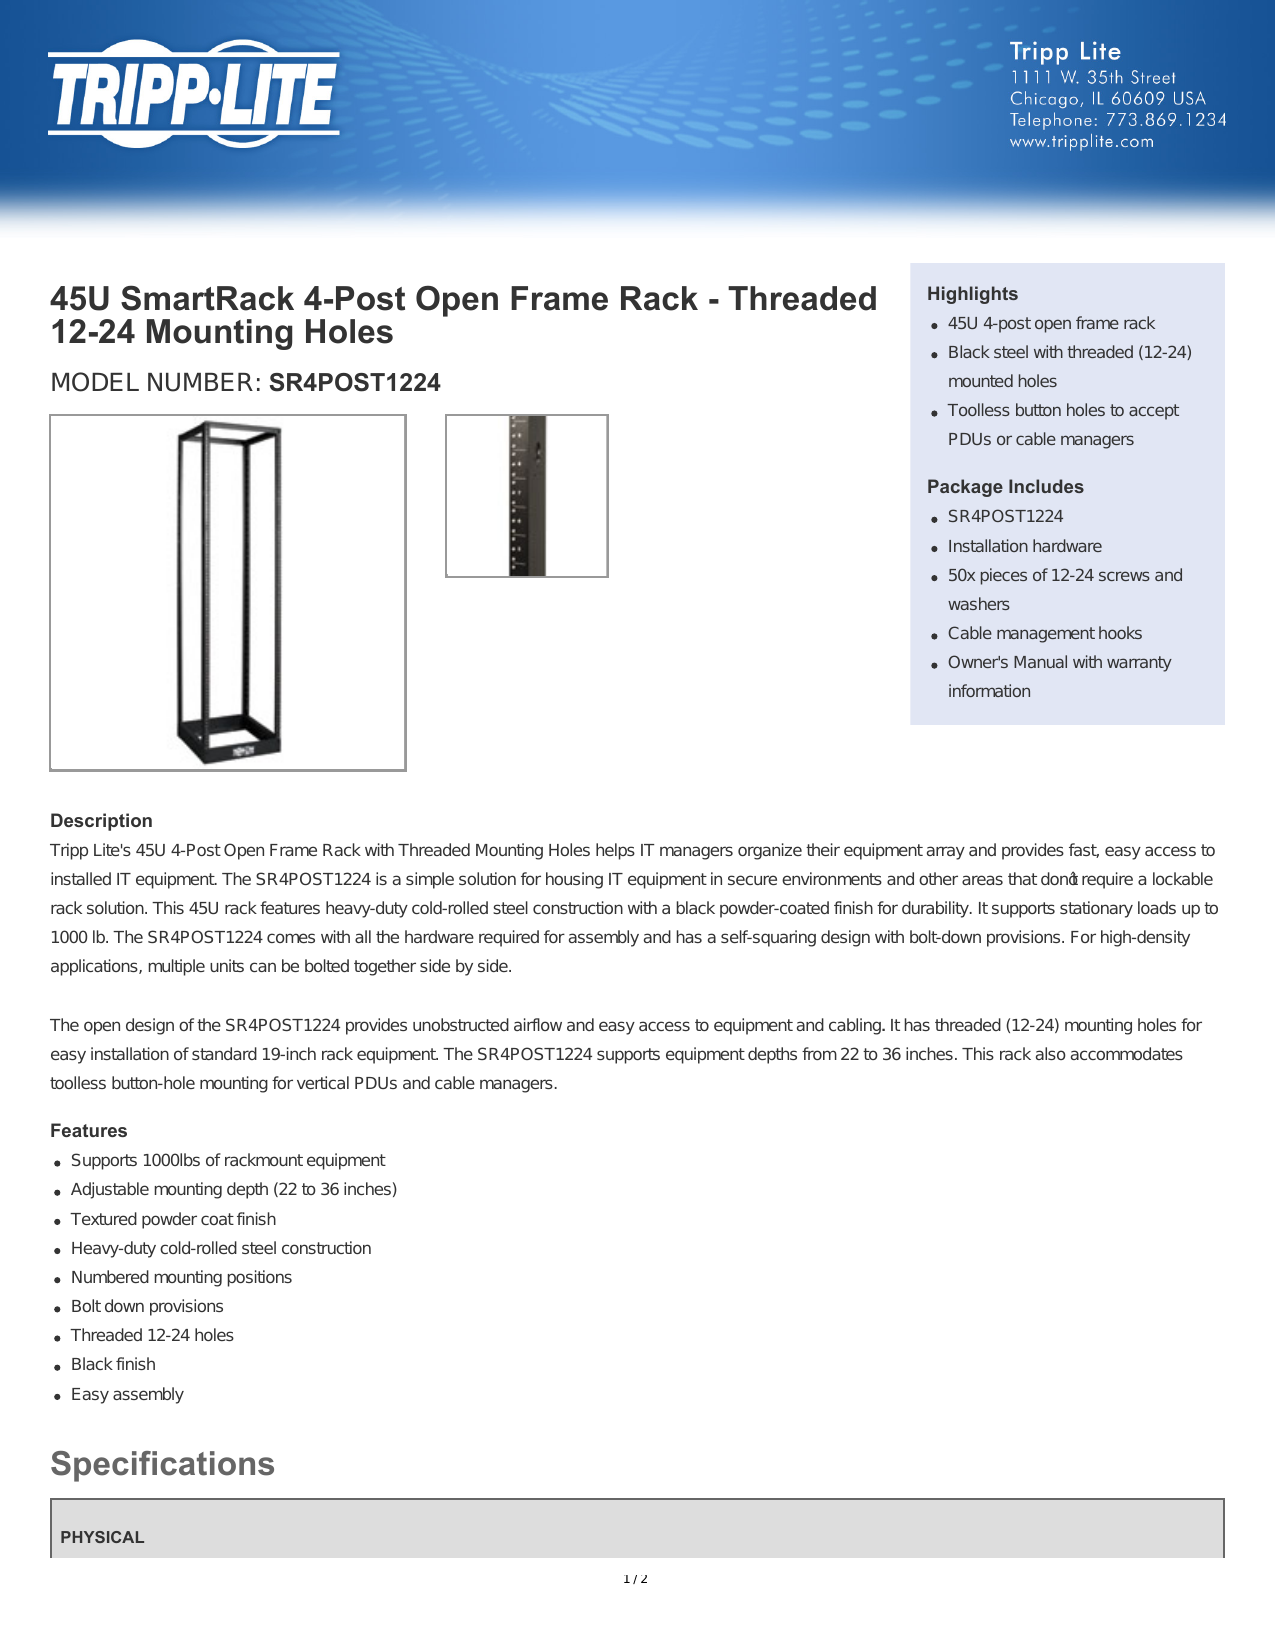 Black Tripp Lite SR4POST1224 45U 4-Post Open Frame Rack Cabinet Threaded 12-24 Mounted Holes